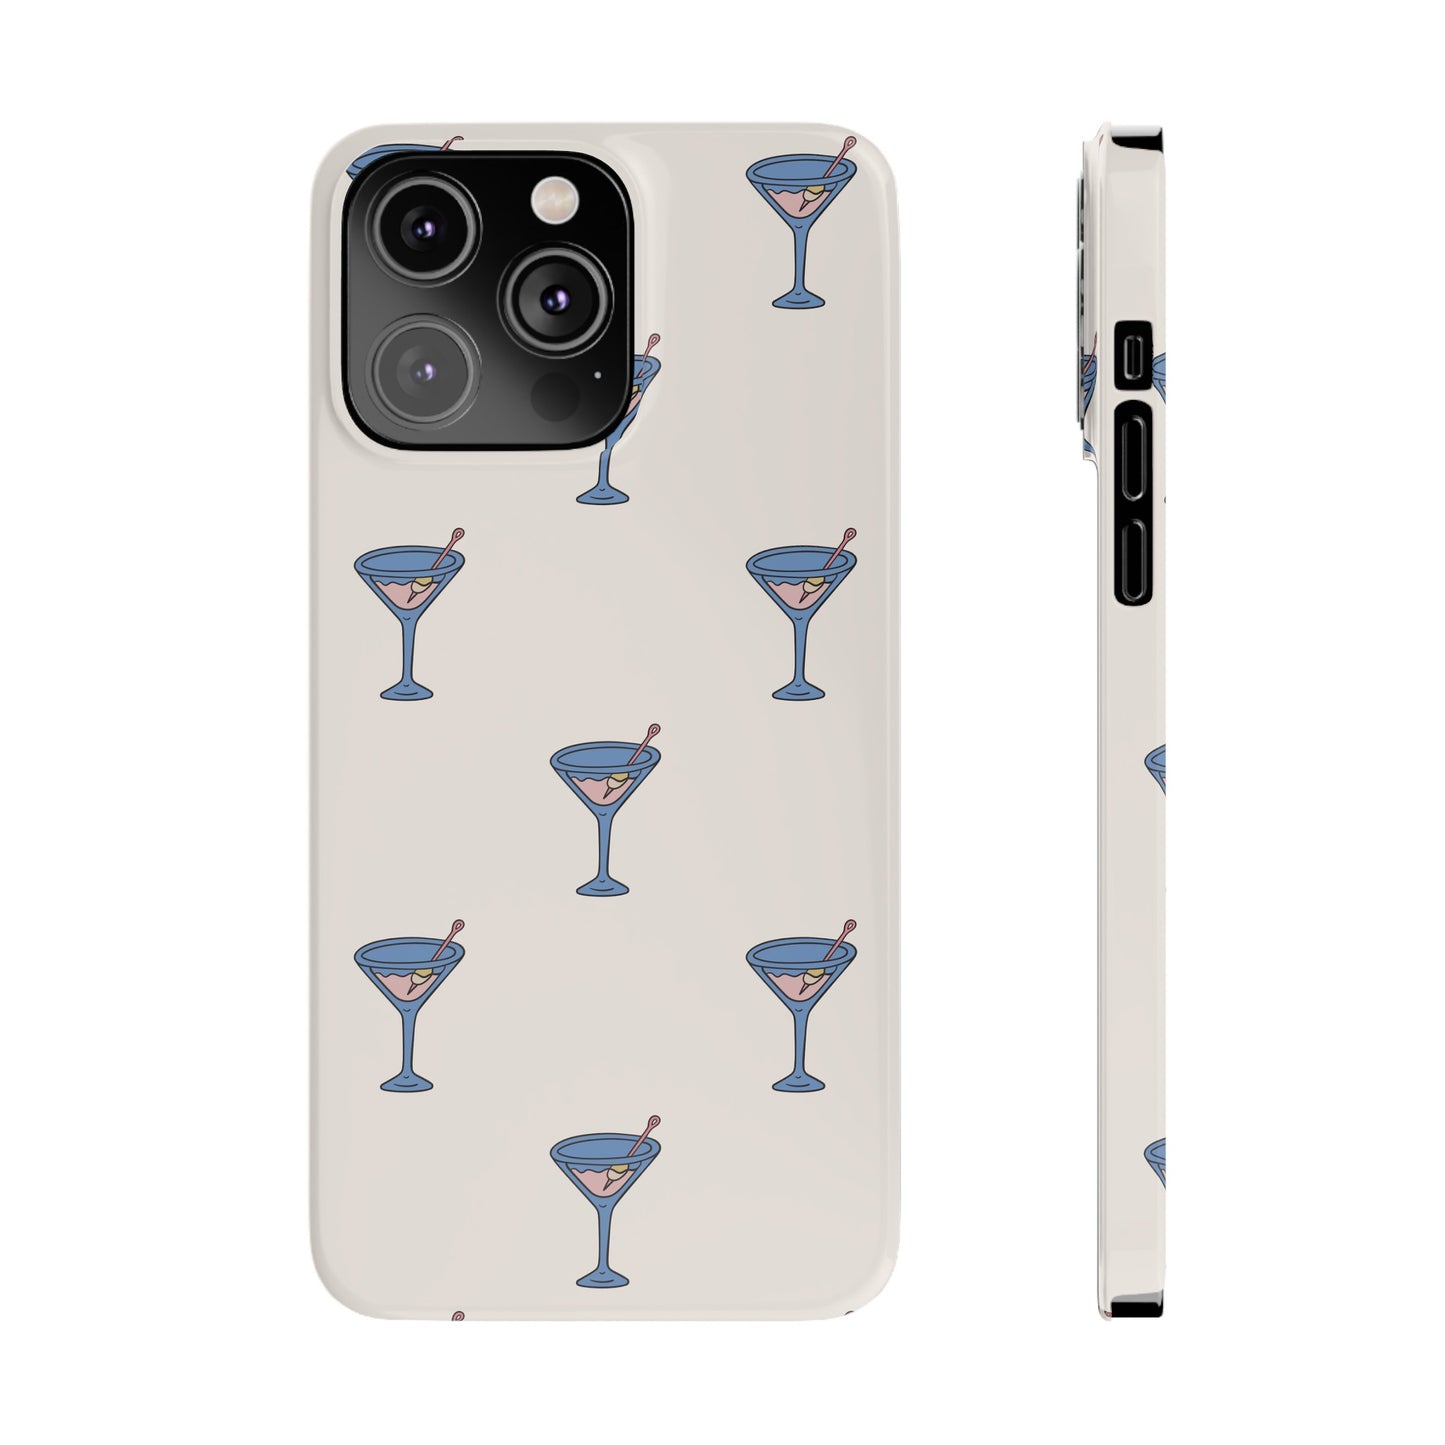 Martini Szn - Iphone Case